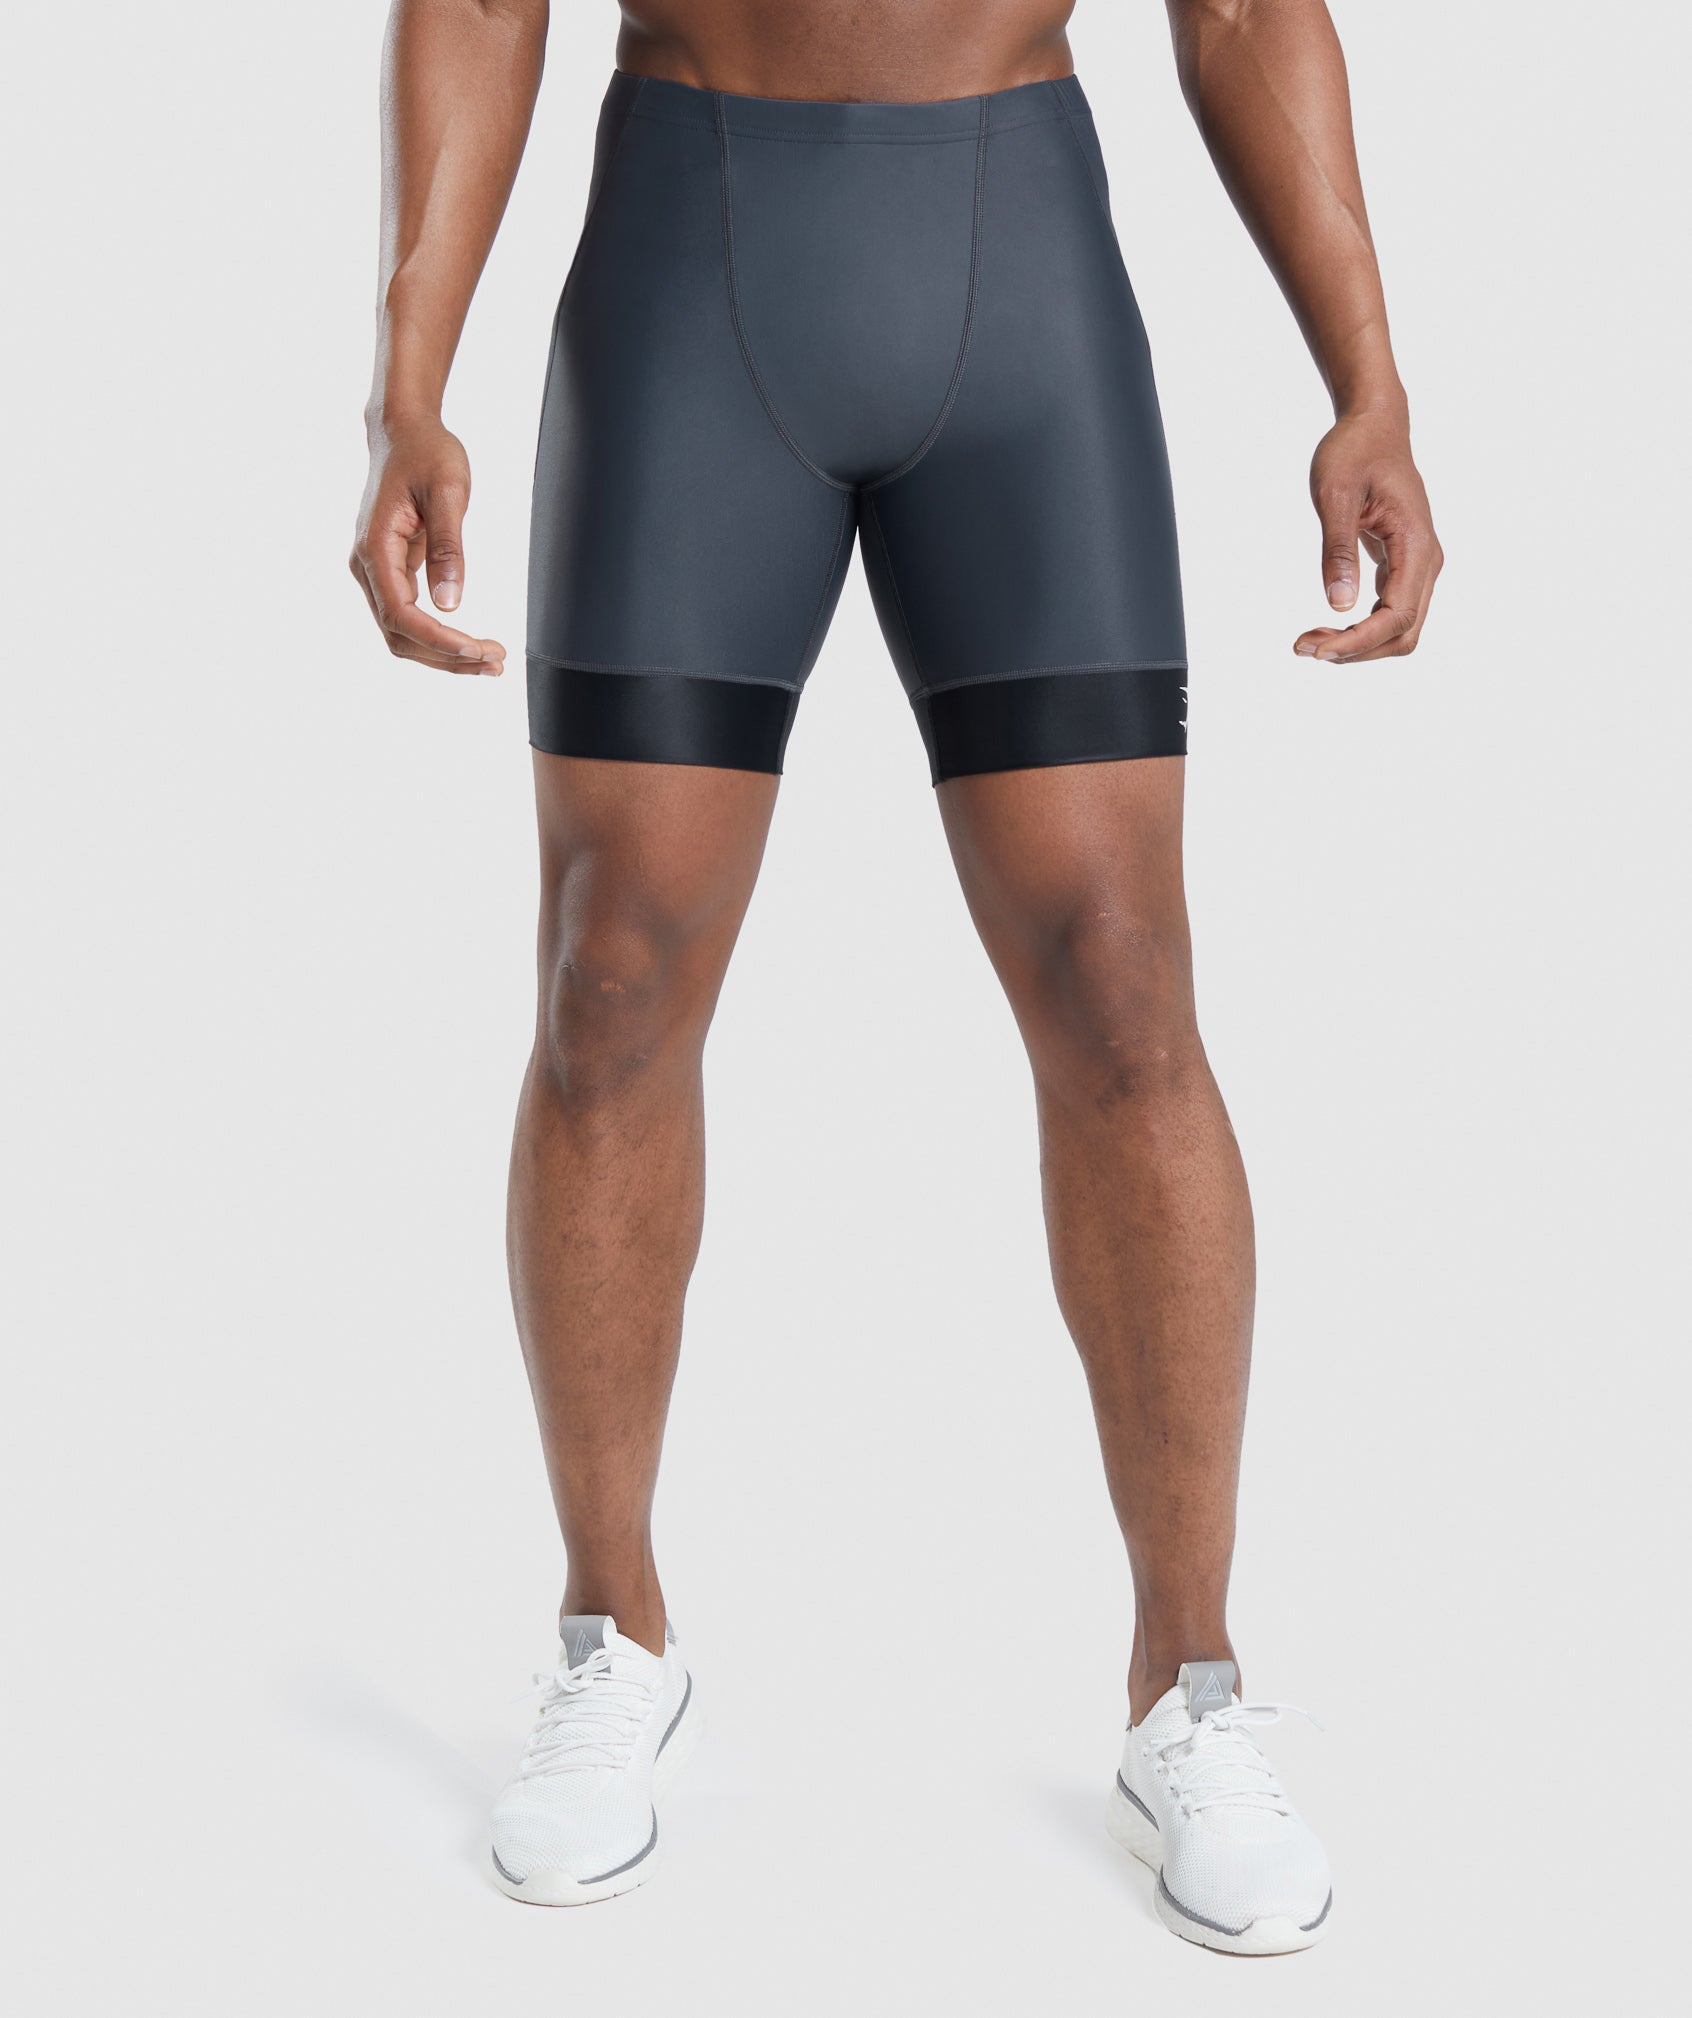 Apex Multi Shorts in Onyx Grey/Black